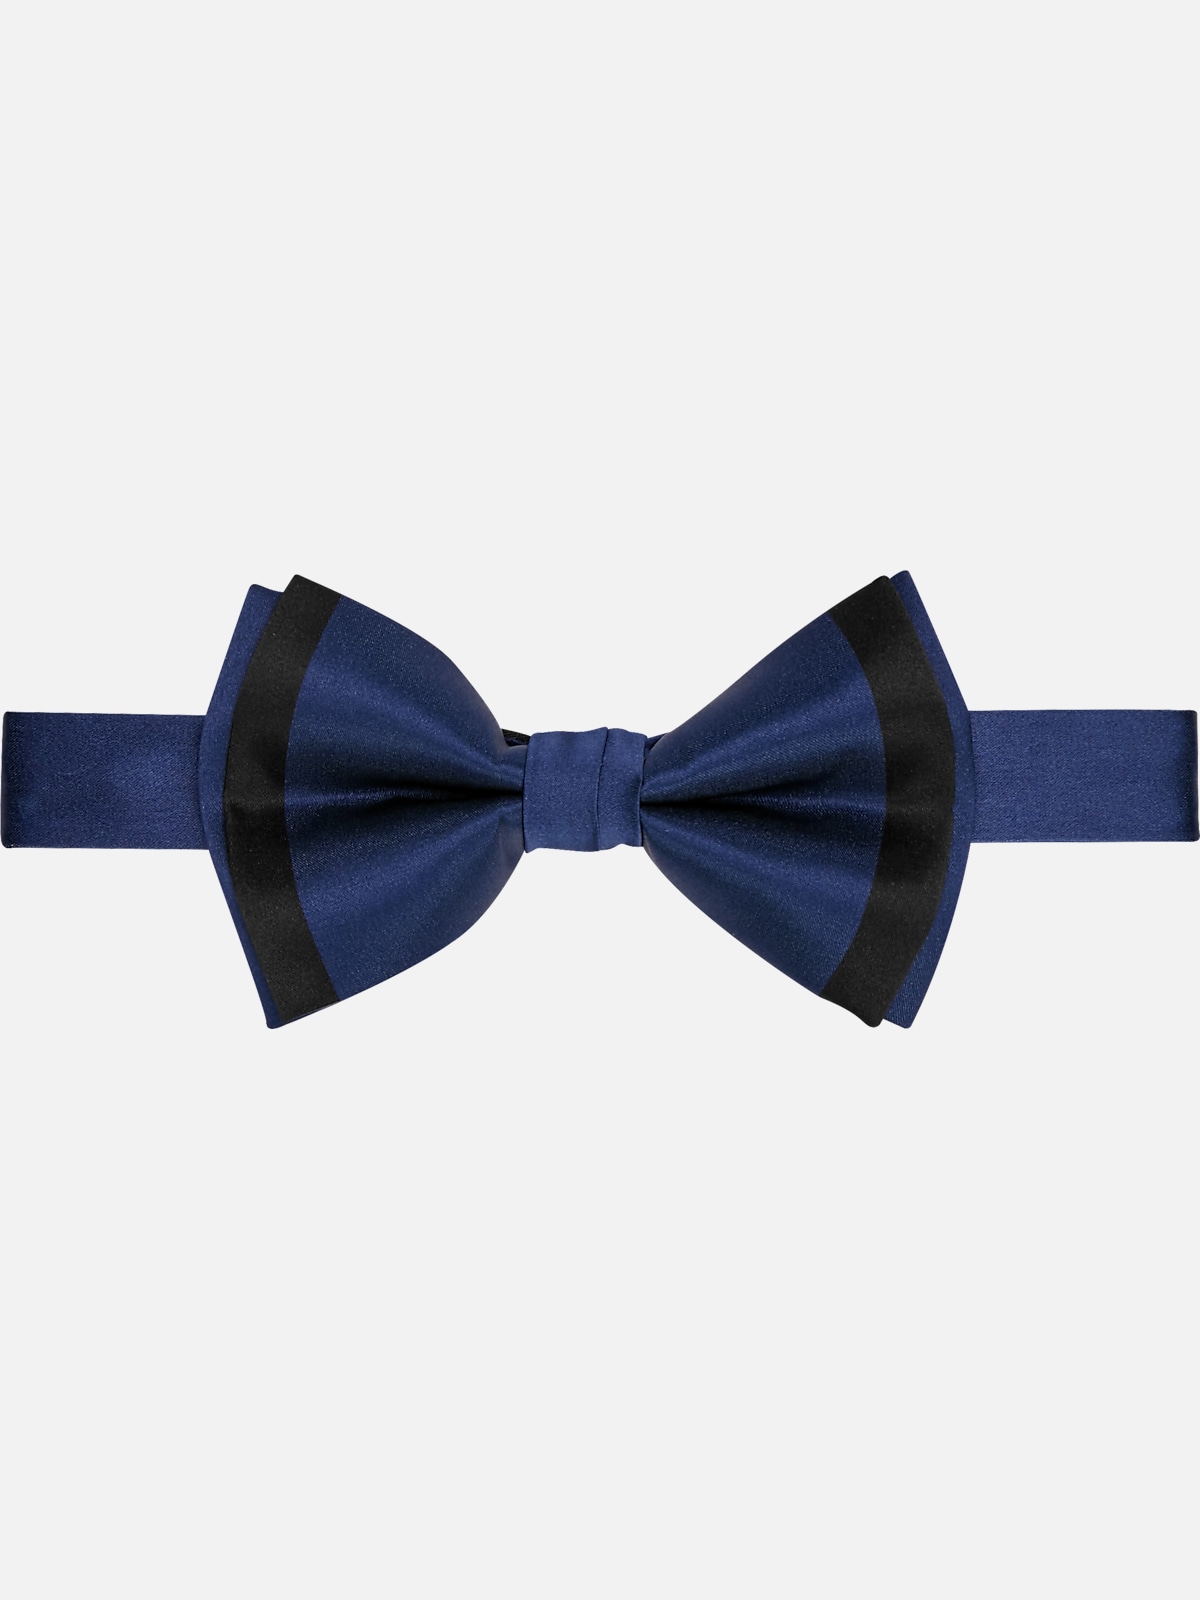 Egara Pre-Tied Formal Bow Tie | All Clearance $39.99| Men's Wearhouse